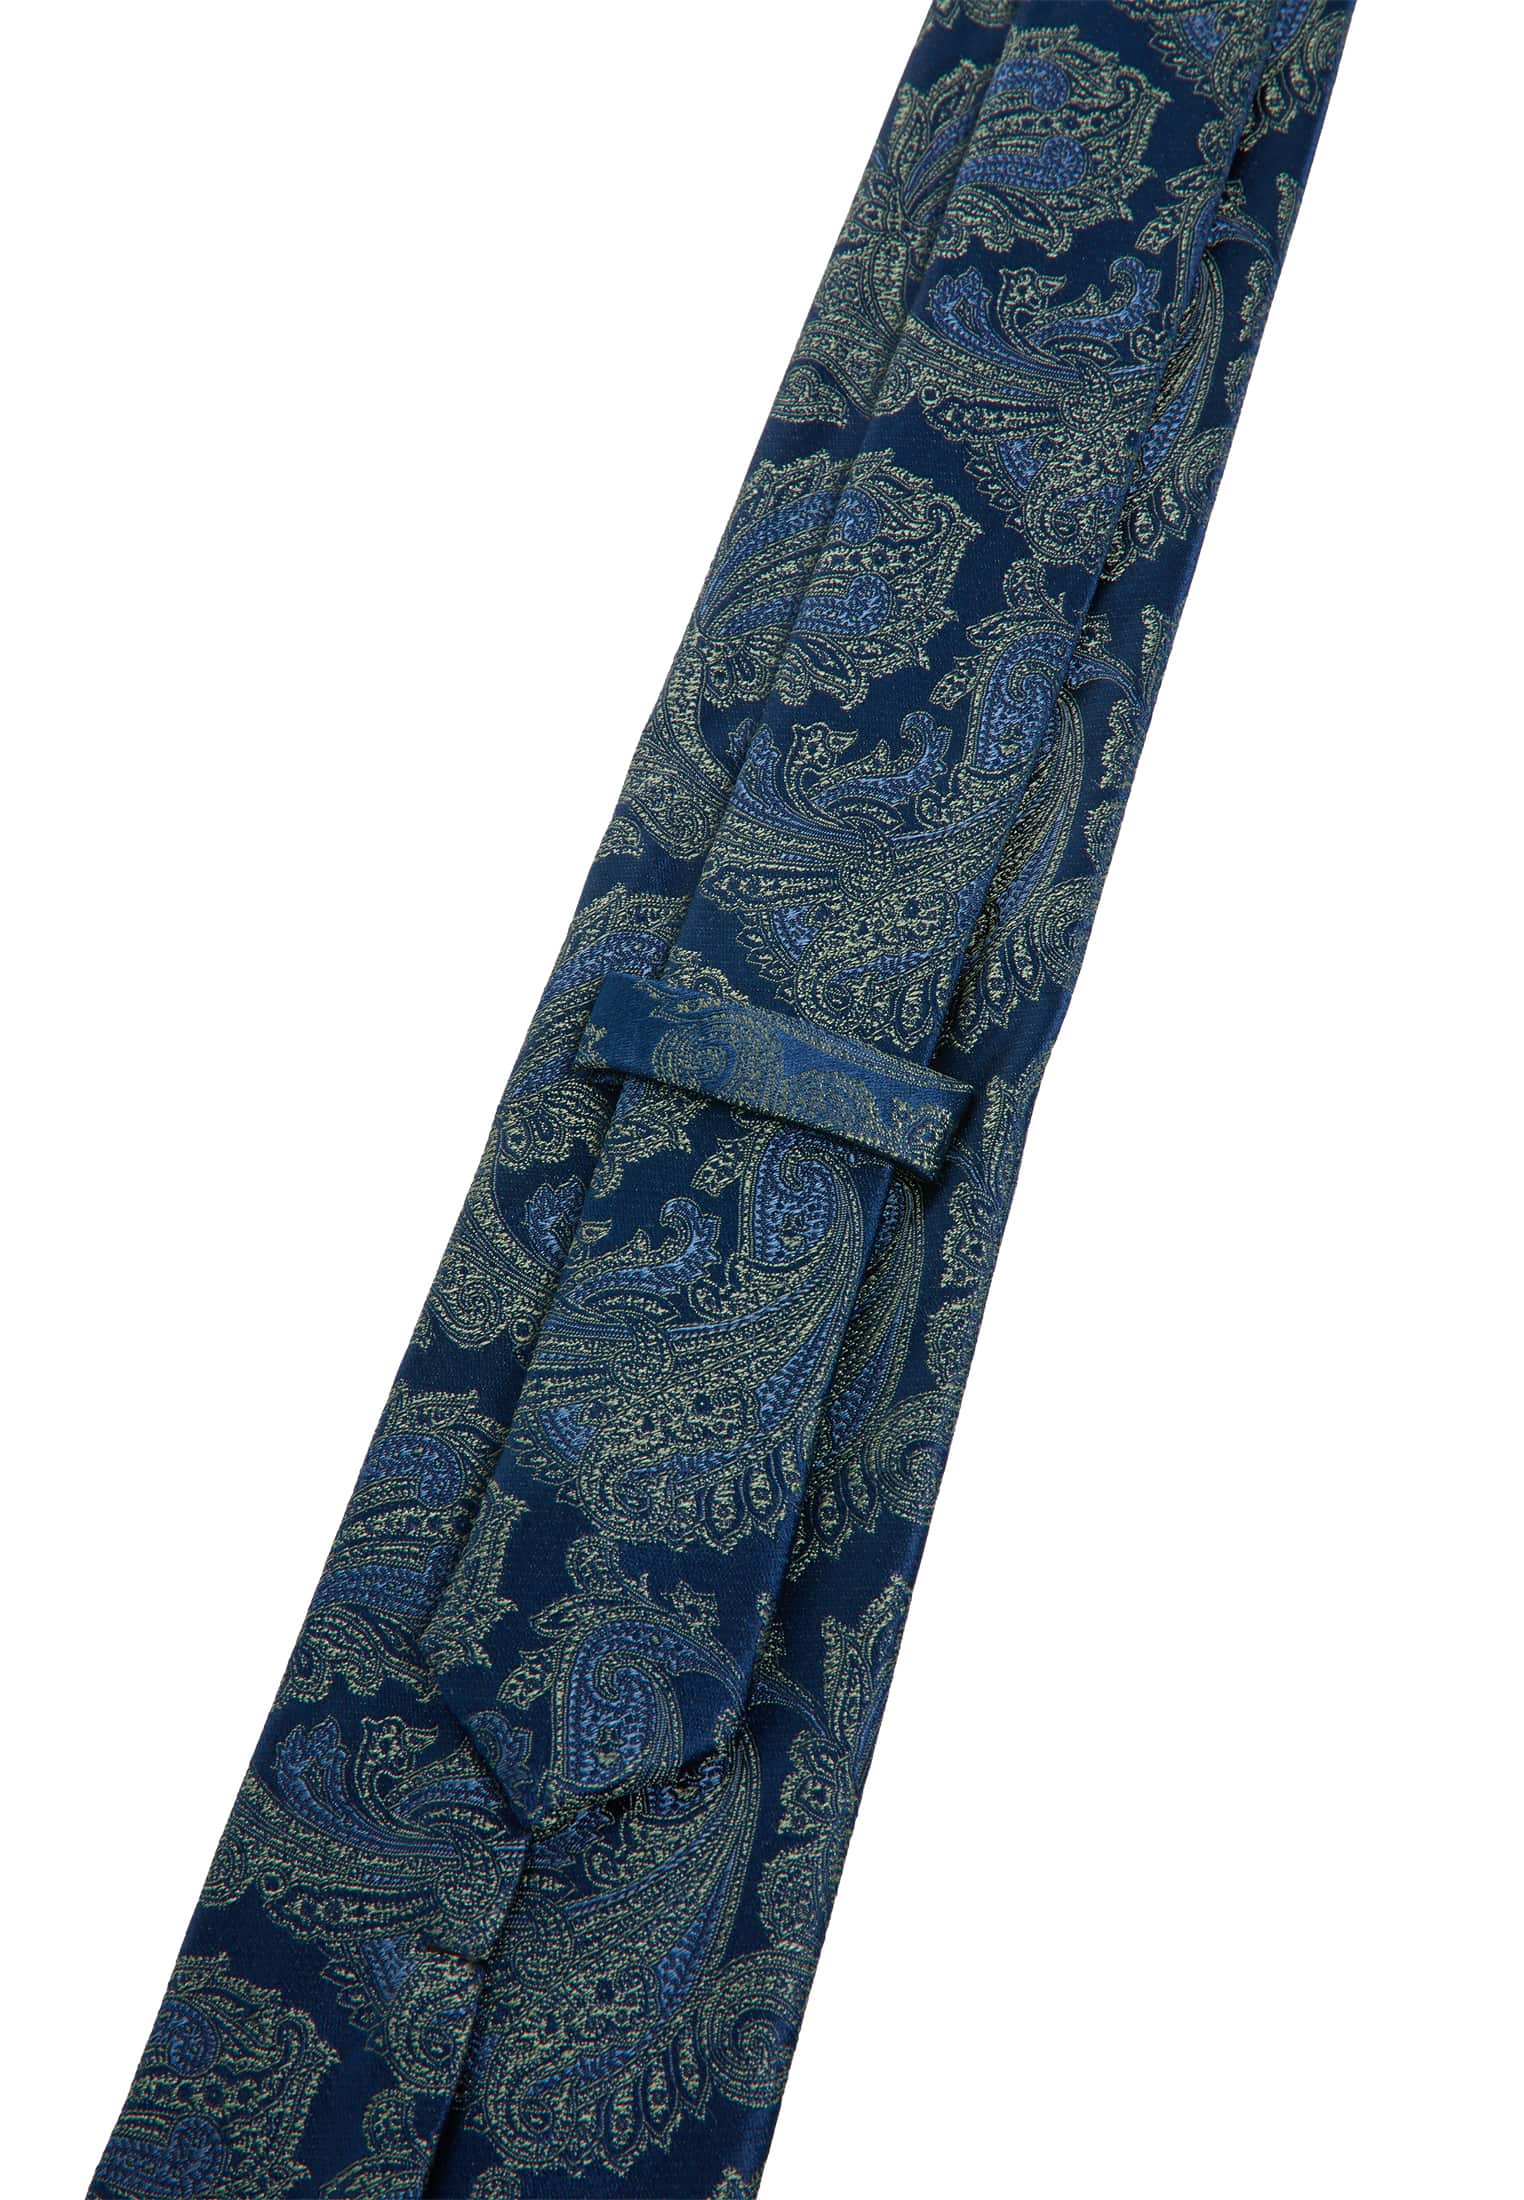 Krawatte in blau/grün | | 1AC01884-81-48-142 gemustert 142 blau/grün 